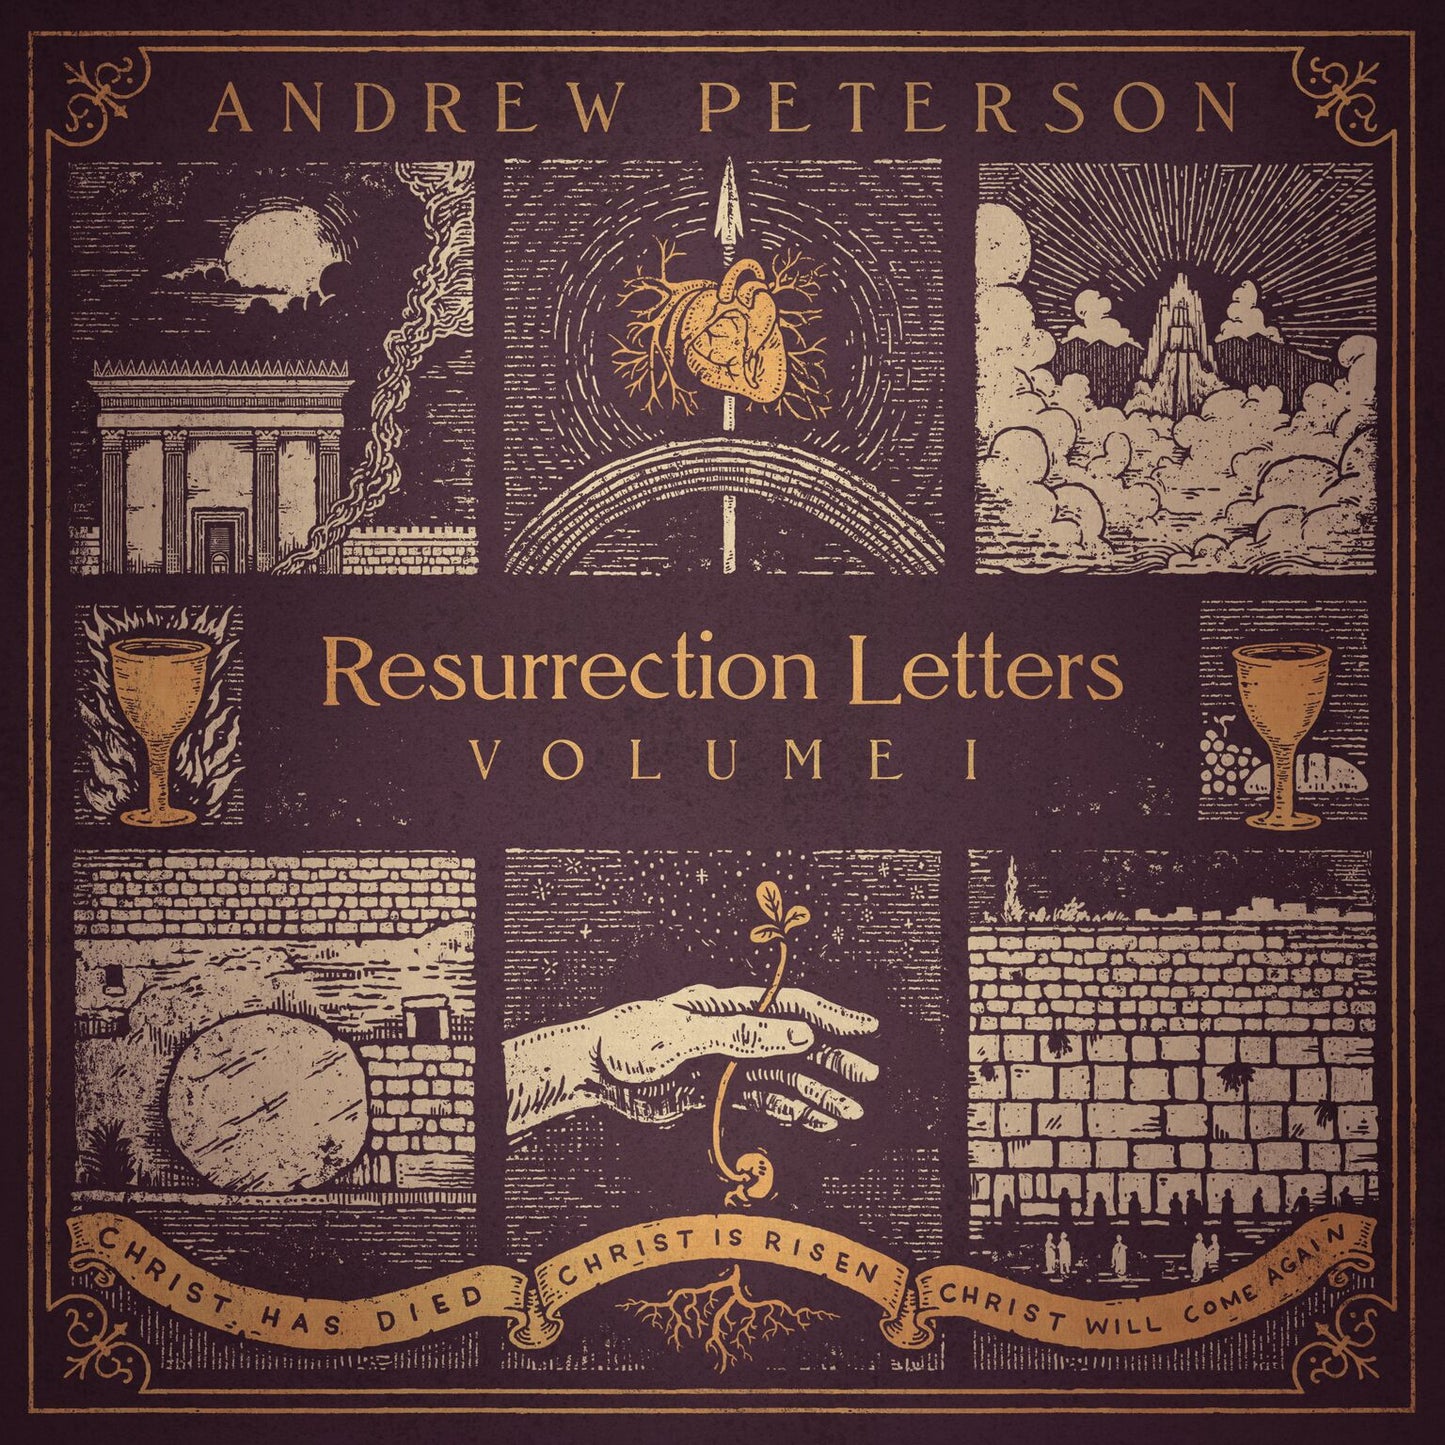 Sheet Music - Resurrection Letters, Prologue + Vol. 1